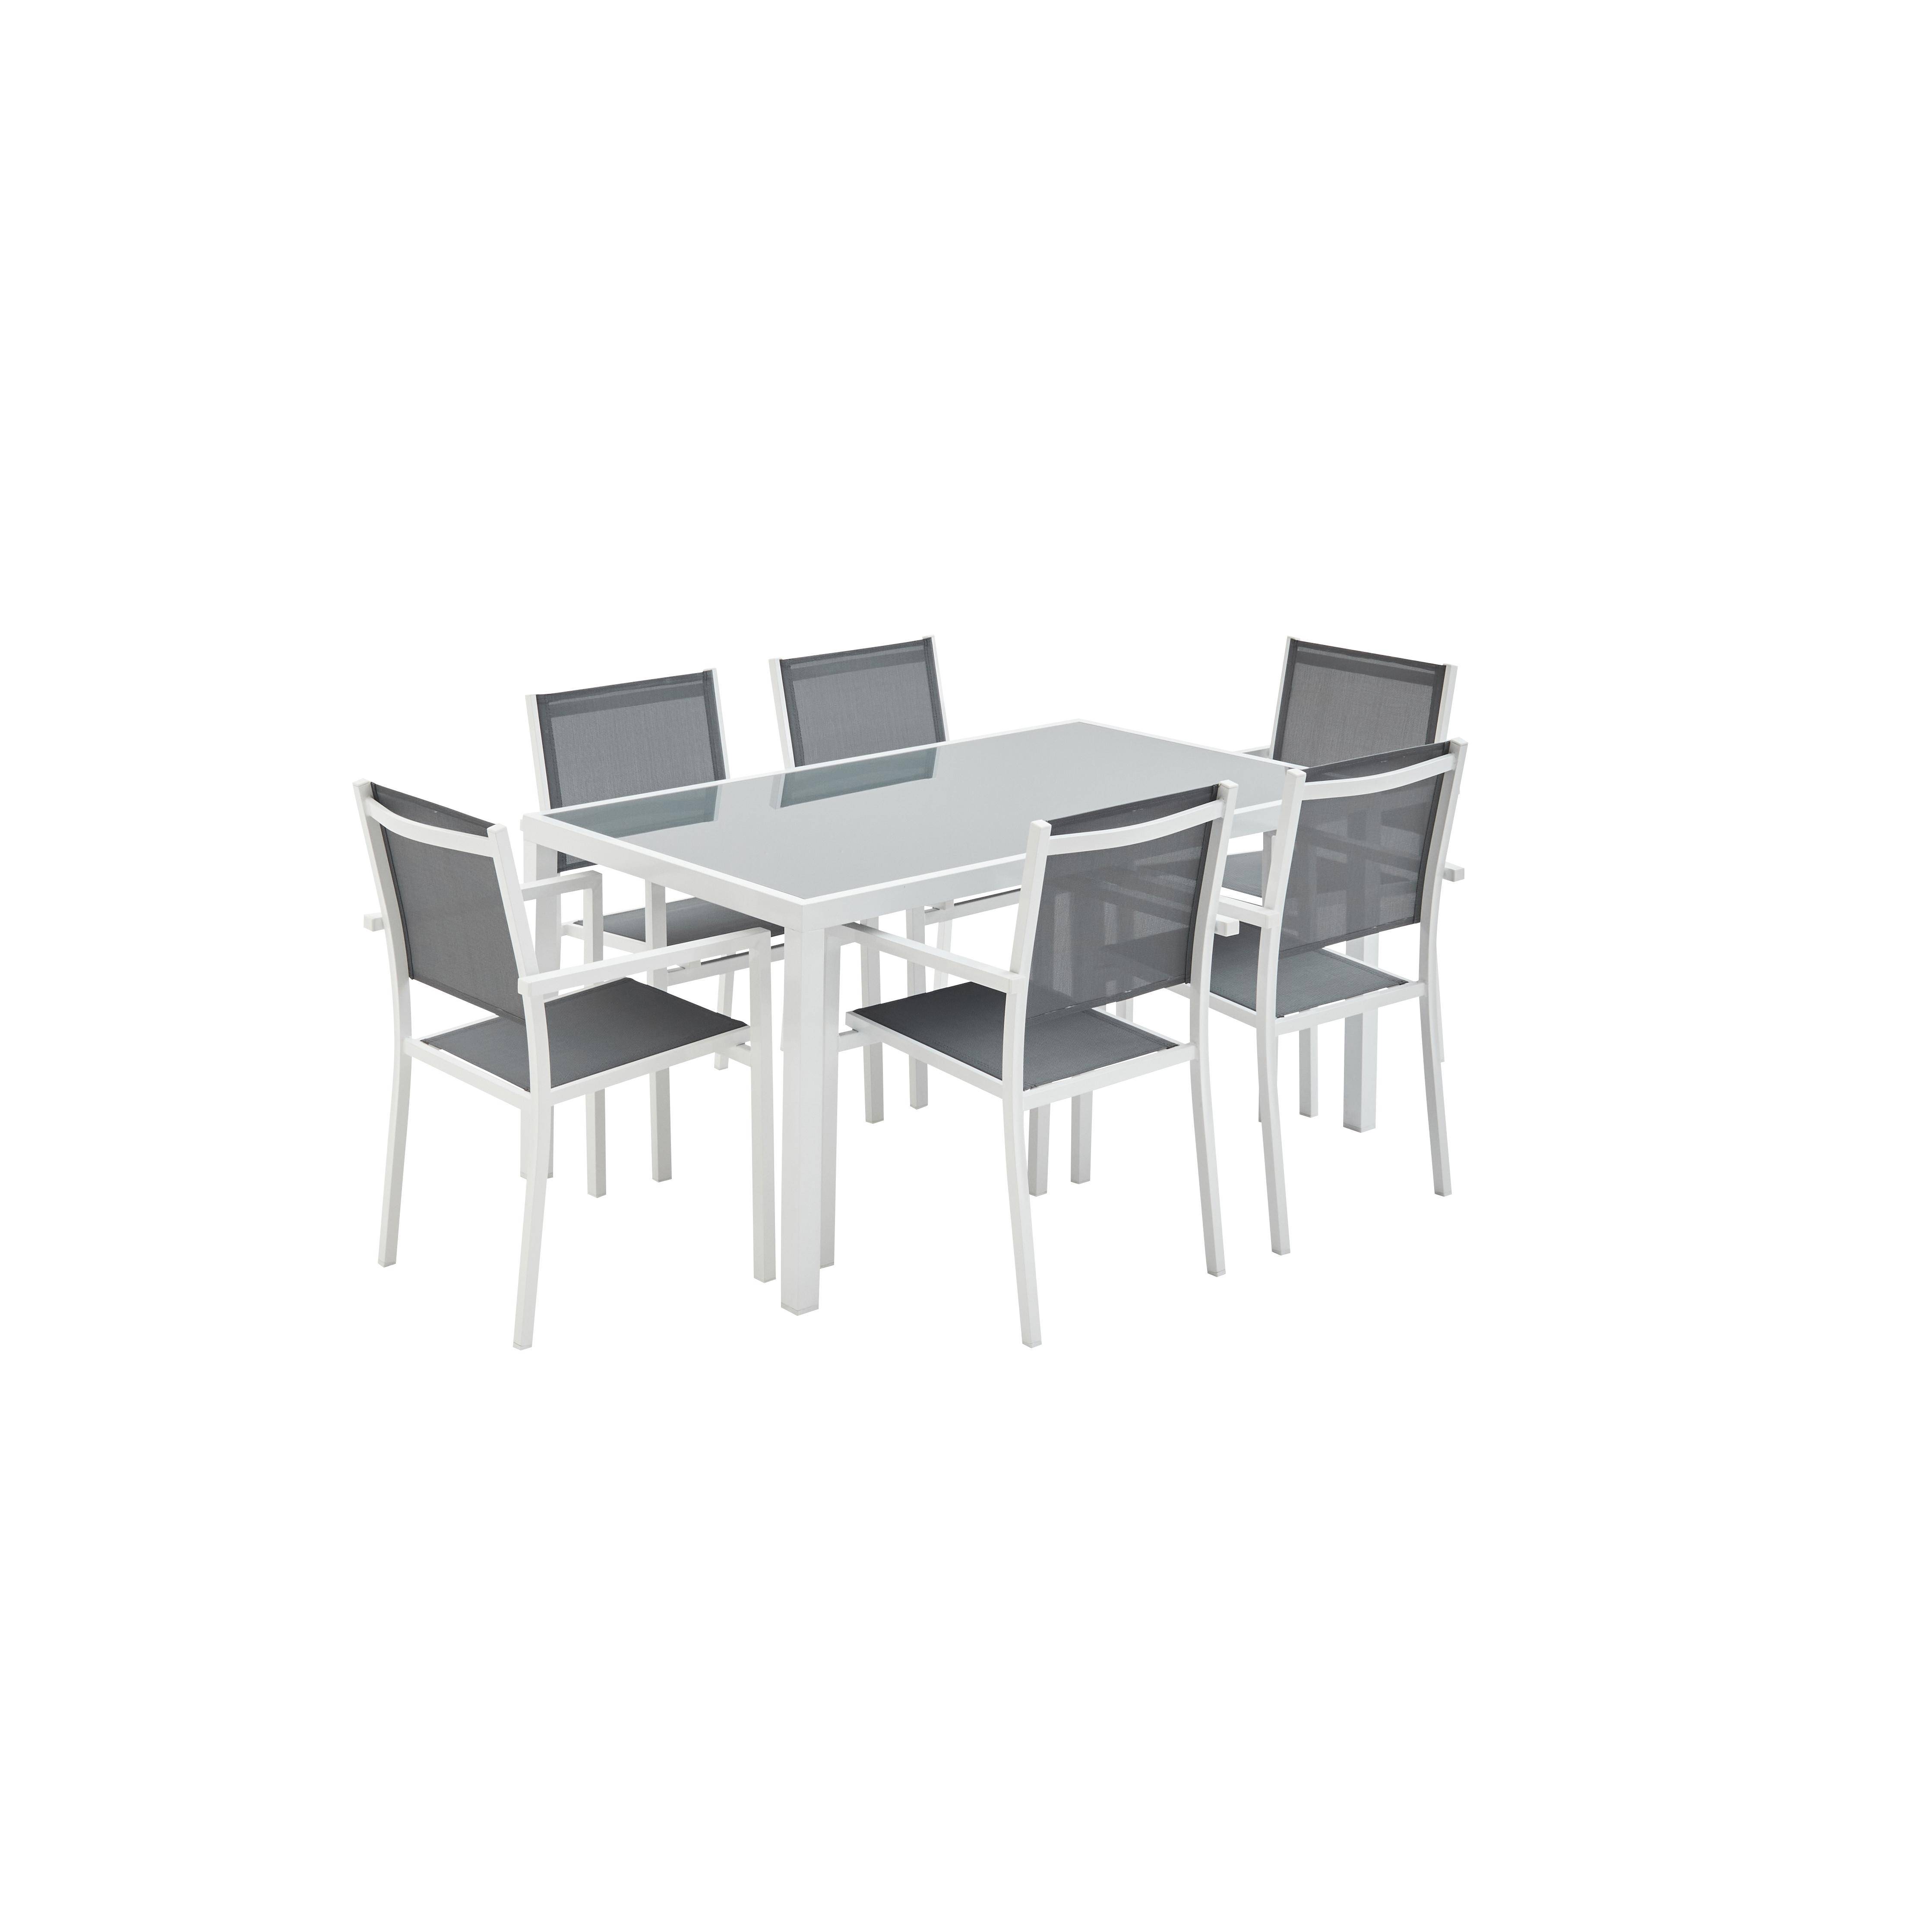 Gartengarnitur aus Aluminium und Textilene - Capua - Weiß, Grau - 1 großer rechteckiger Tisch, 6 stapelbare Sessel Photo2